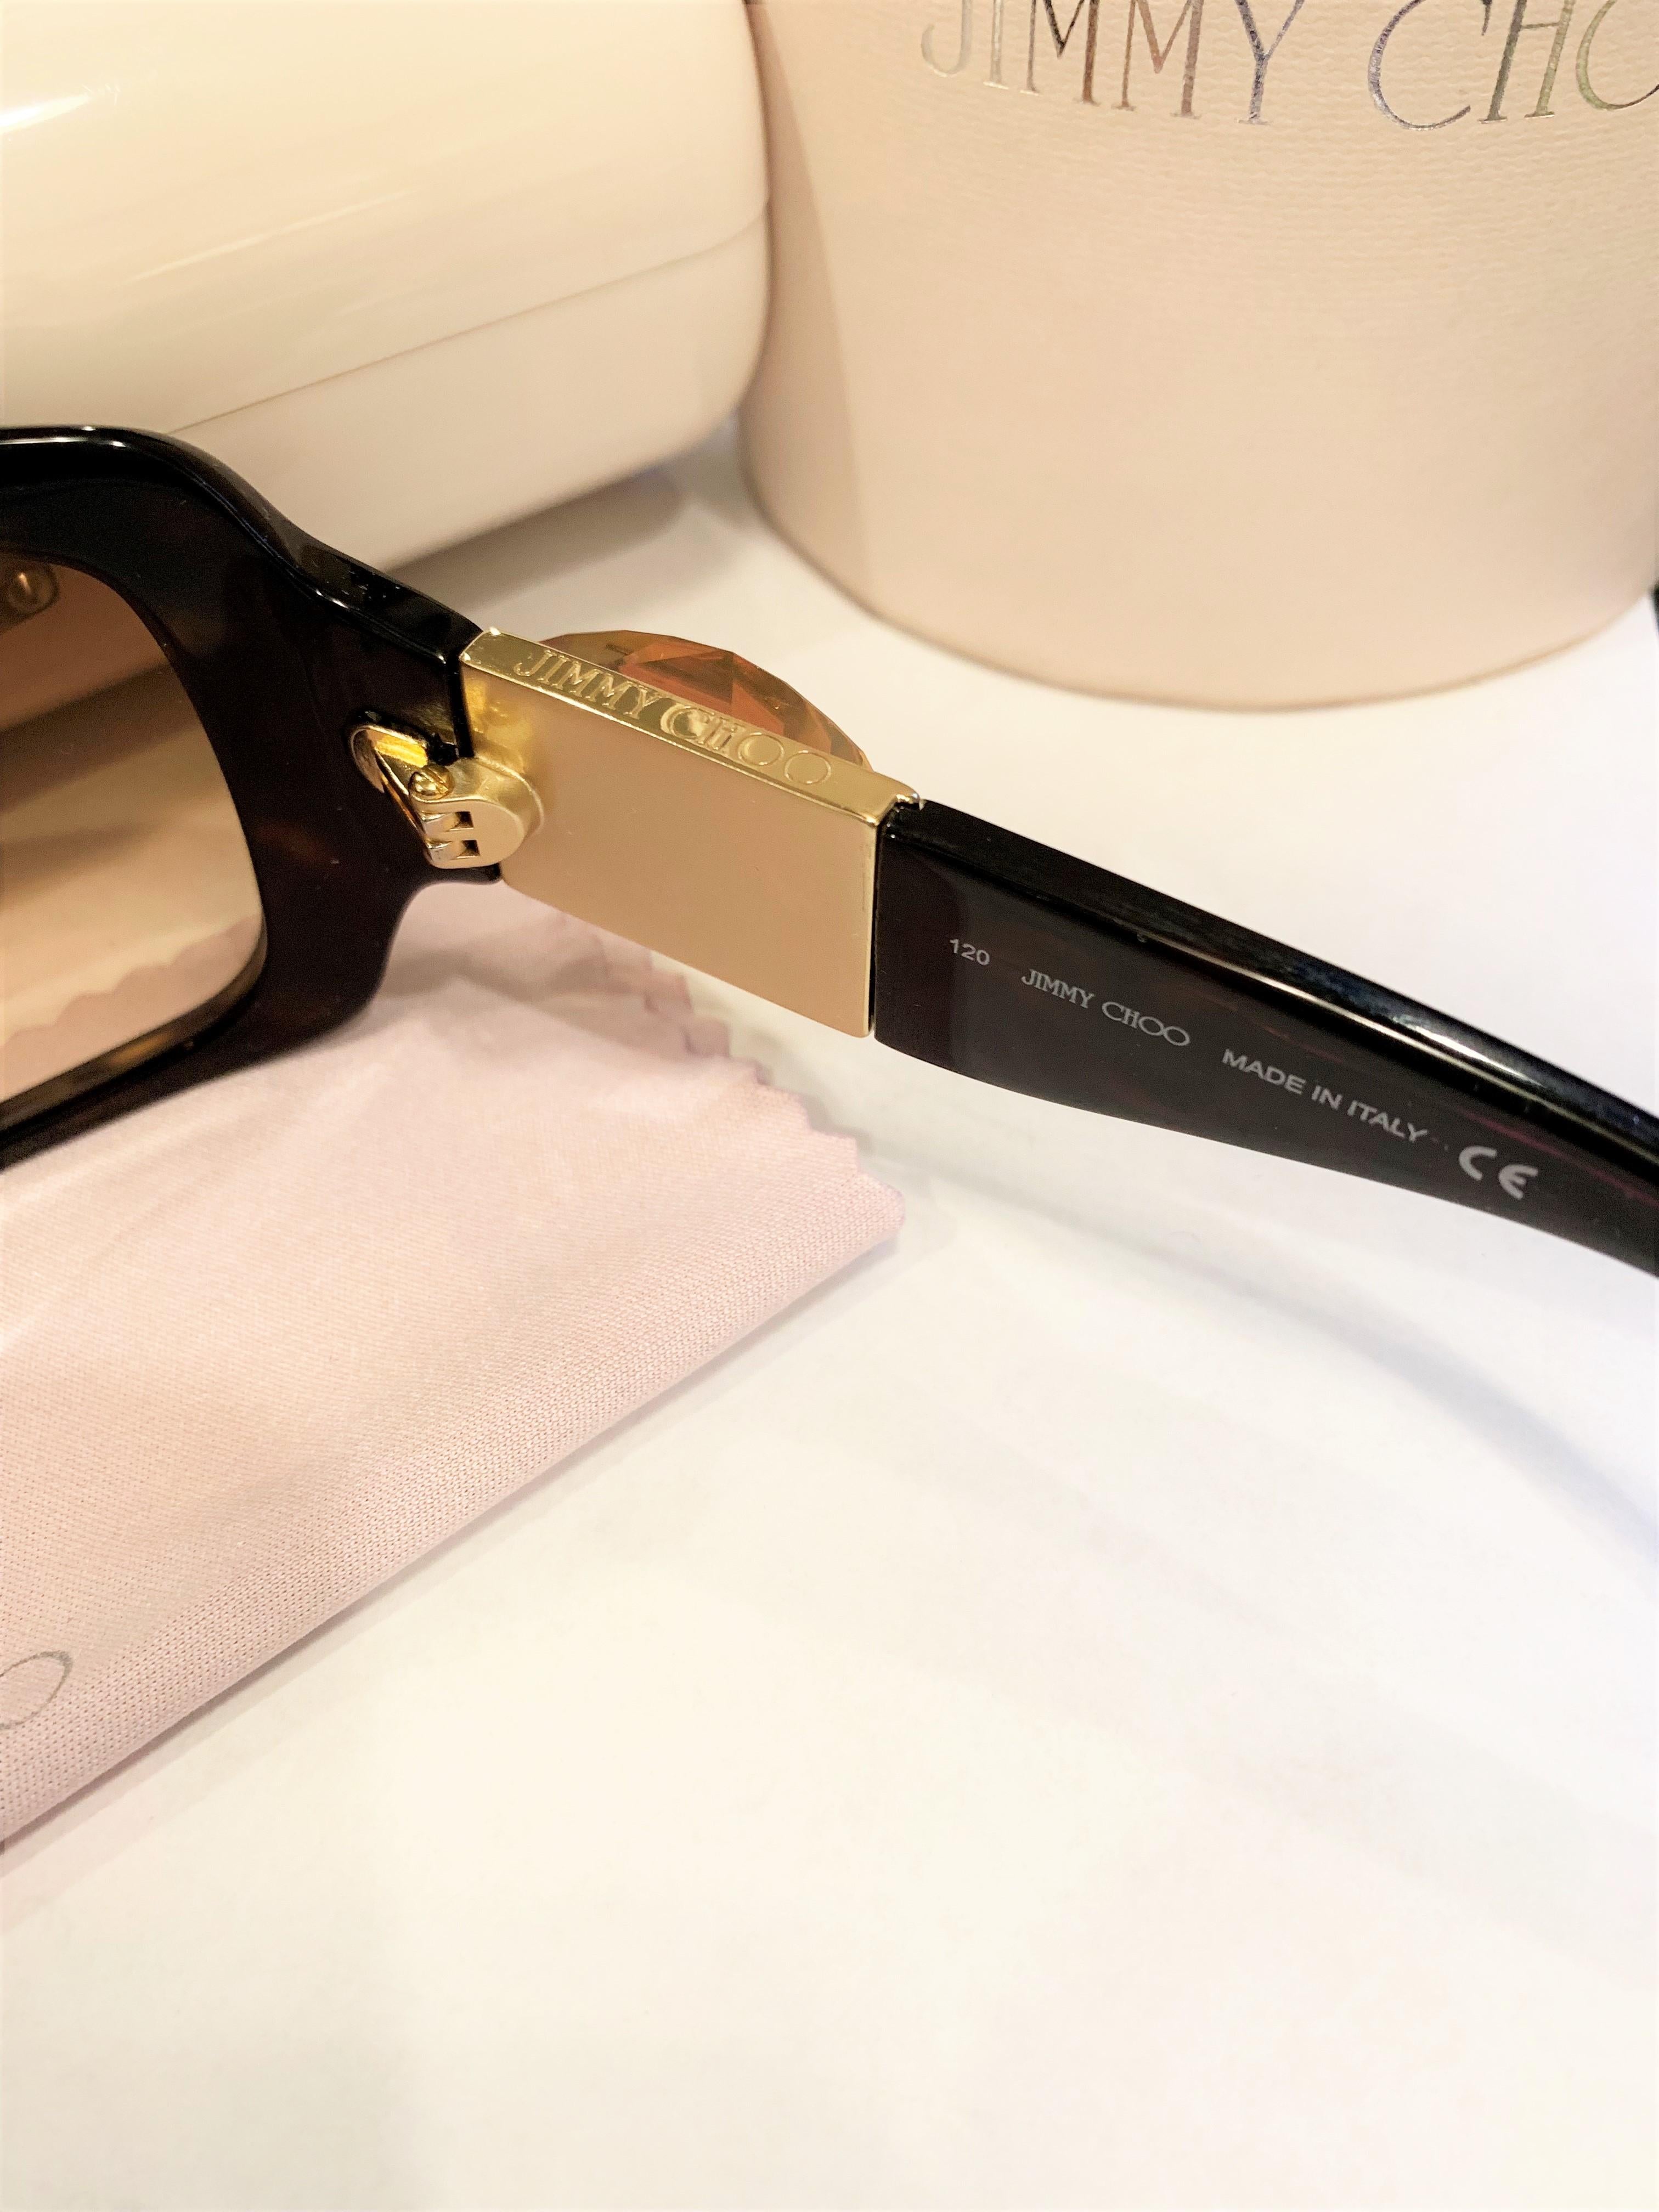 New Jimmy Choo Swarovski Sunglasses With Case & Box $595 4